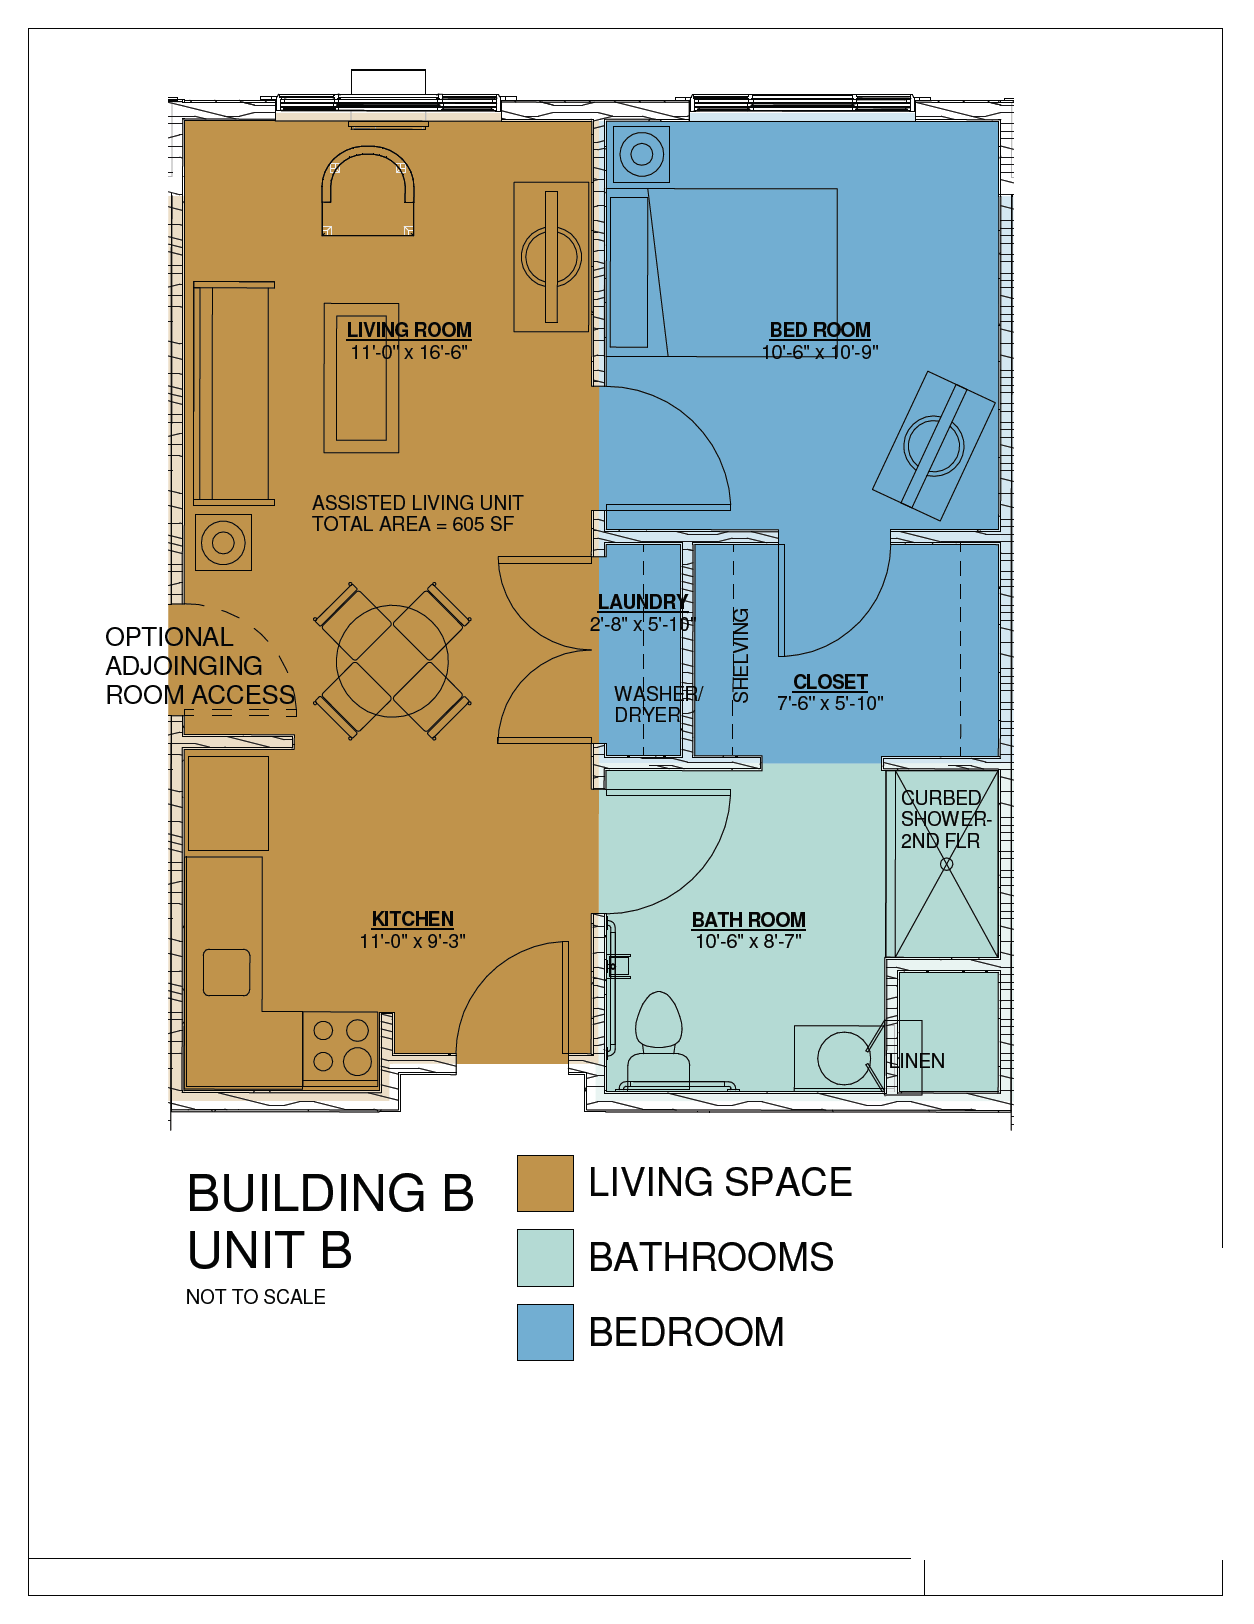 Building b unit 8 floor plan.